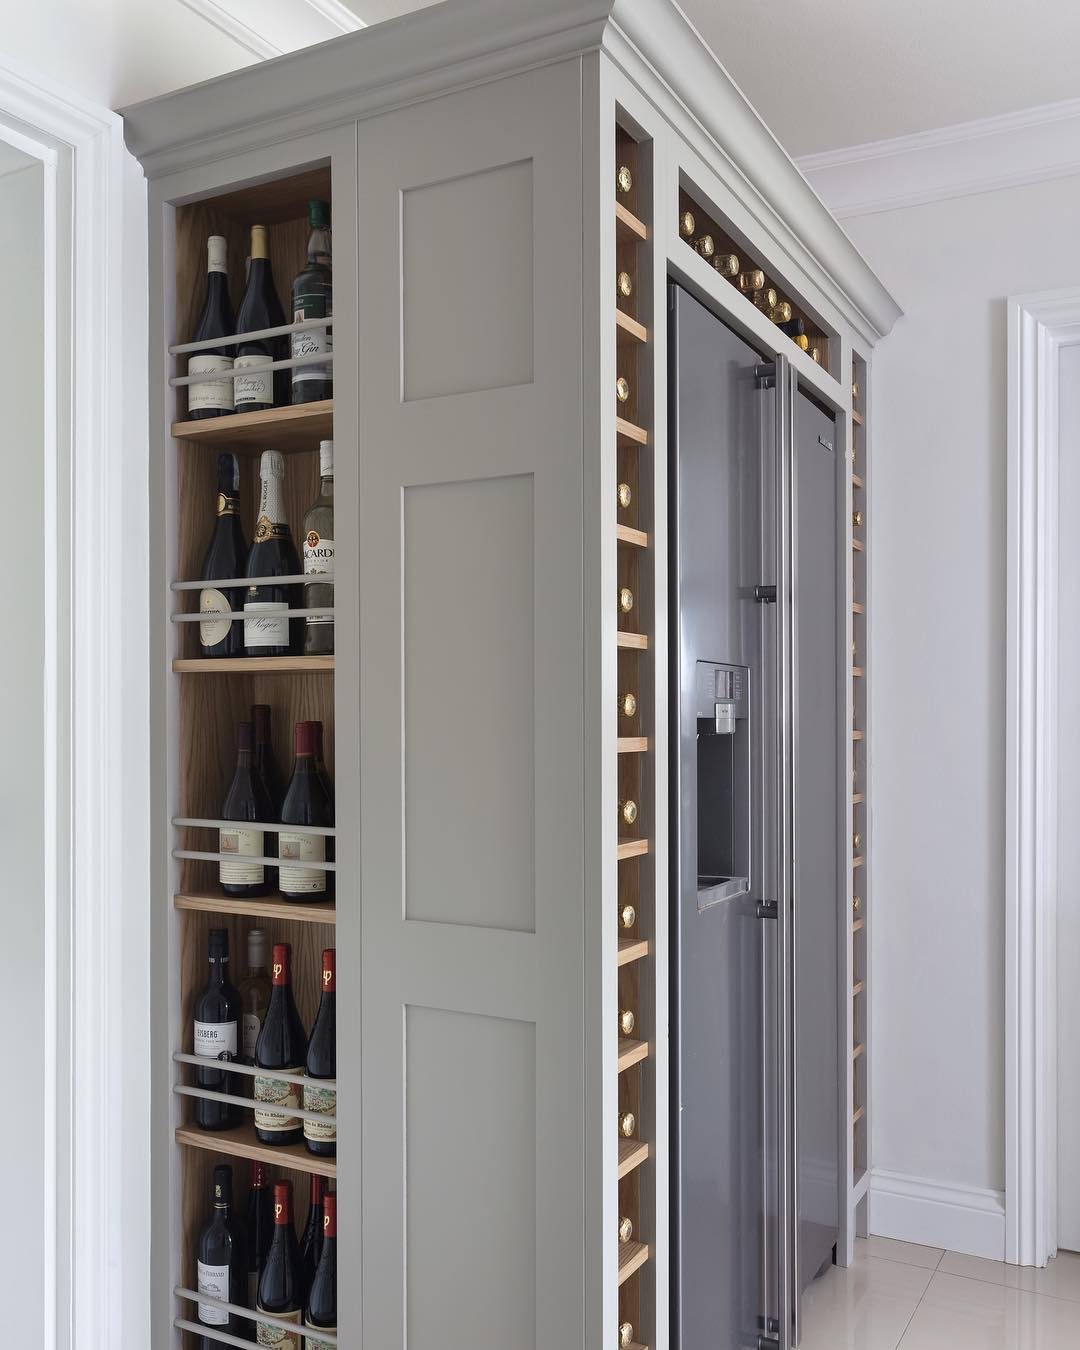 Wine Bottles Stored Alongside and Above Refrigerator. Photo by Instagram user @charliekinghamcabinetmakers